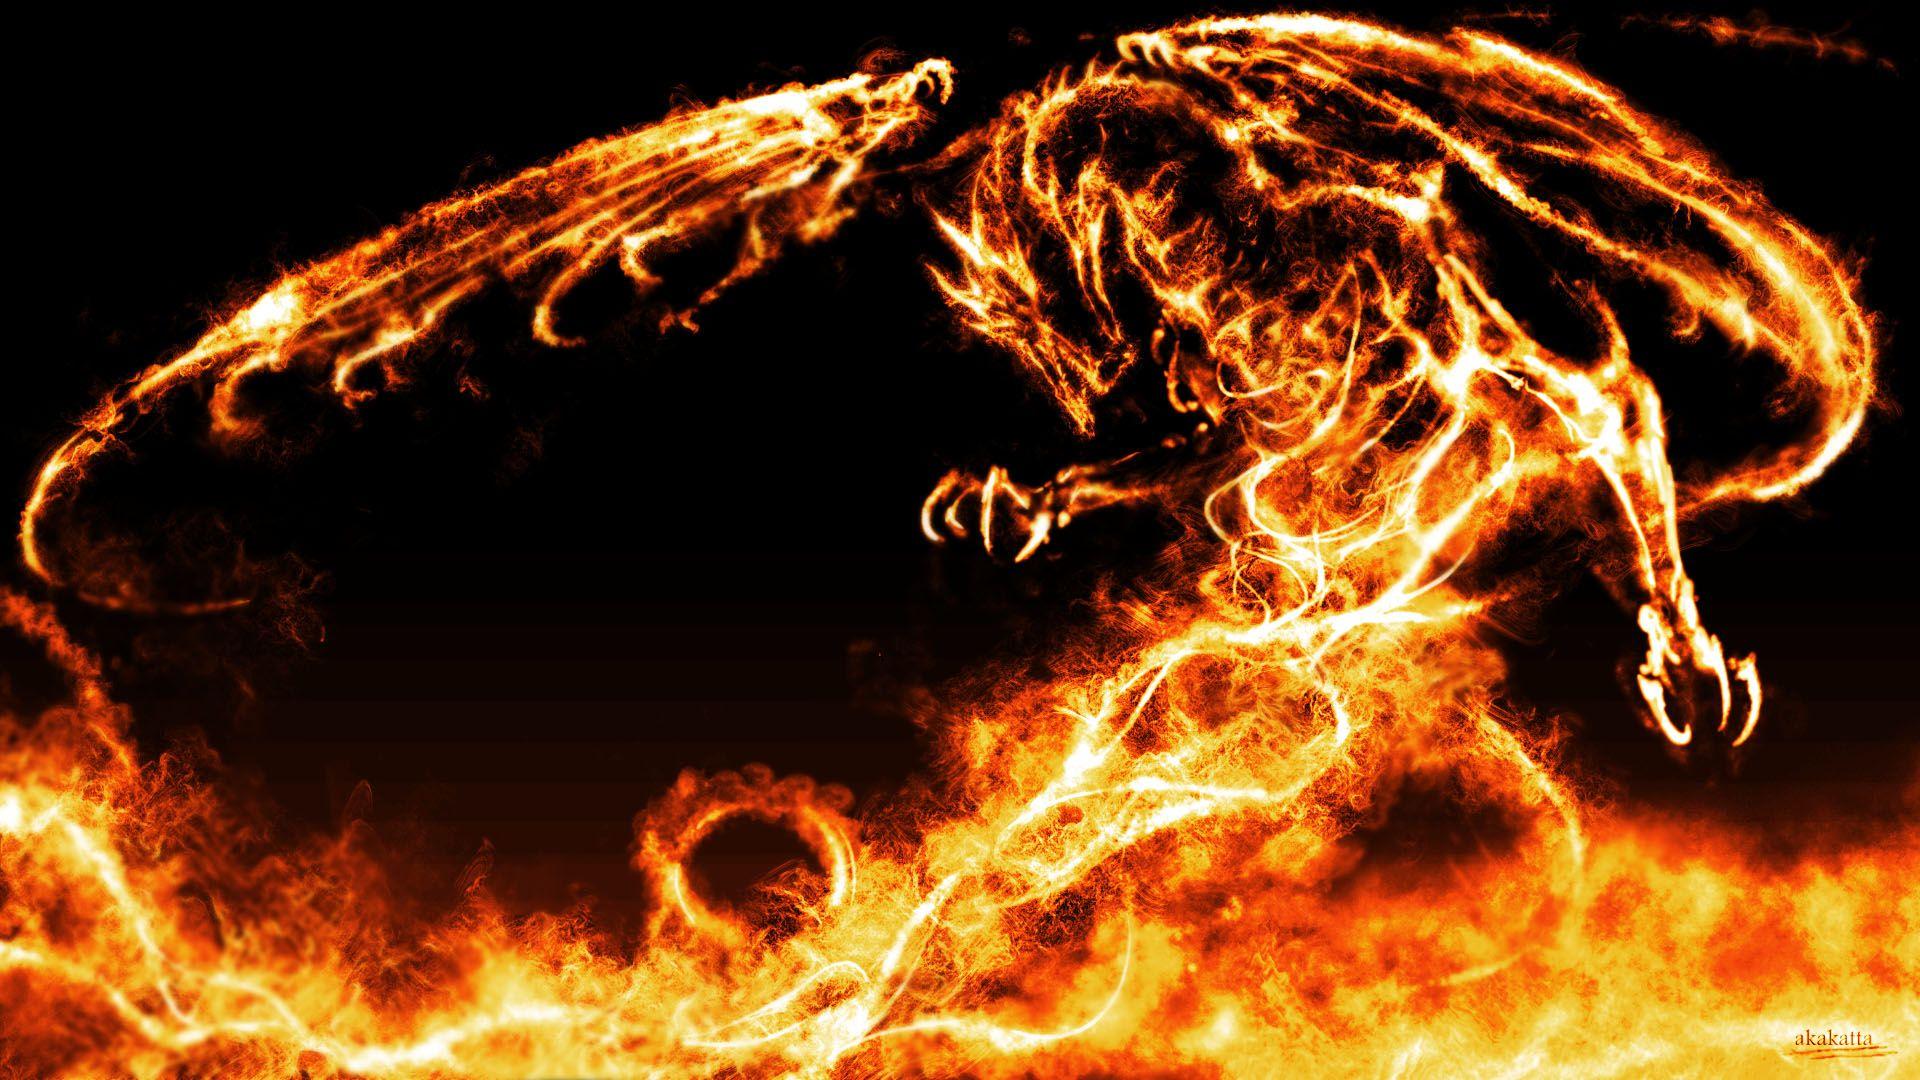 Fire Dragon HD Desktop Wallpaper, Instagram photo, Background Image